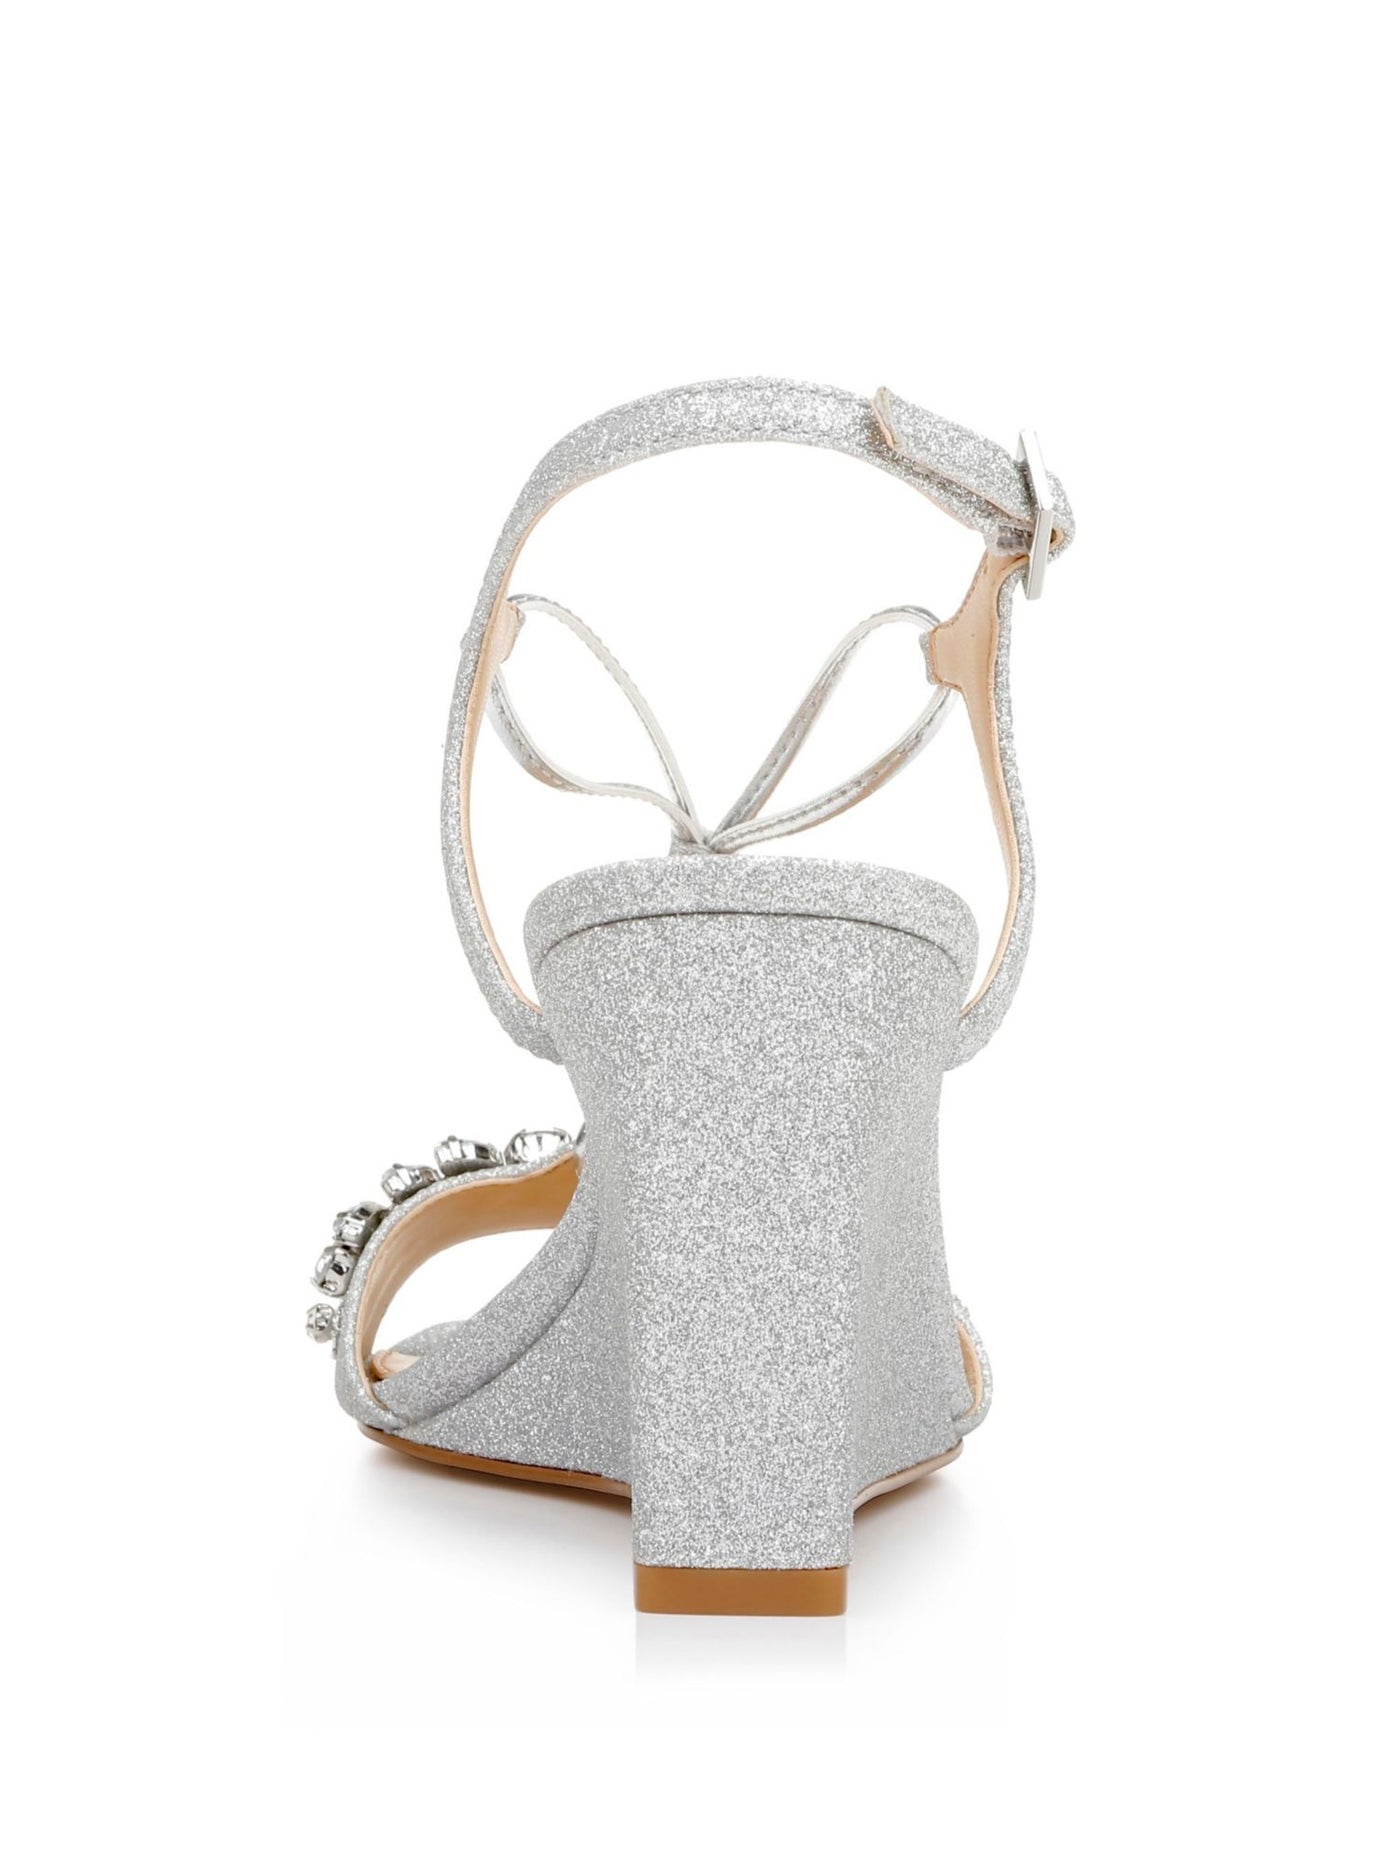 JEWEL BADGLEY MISCHKA Womens Silver Glitter Tubular Straps Comfort Adjustable Strap Gem Accent Oakes Square Toe Wedge Buckle Dress Sandals Shoes 8